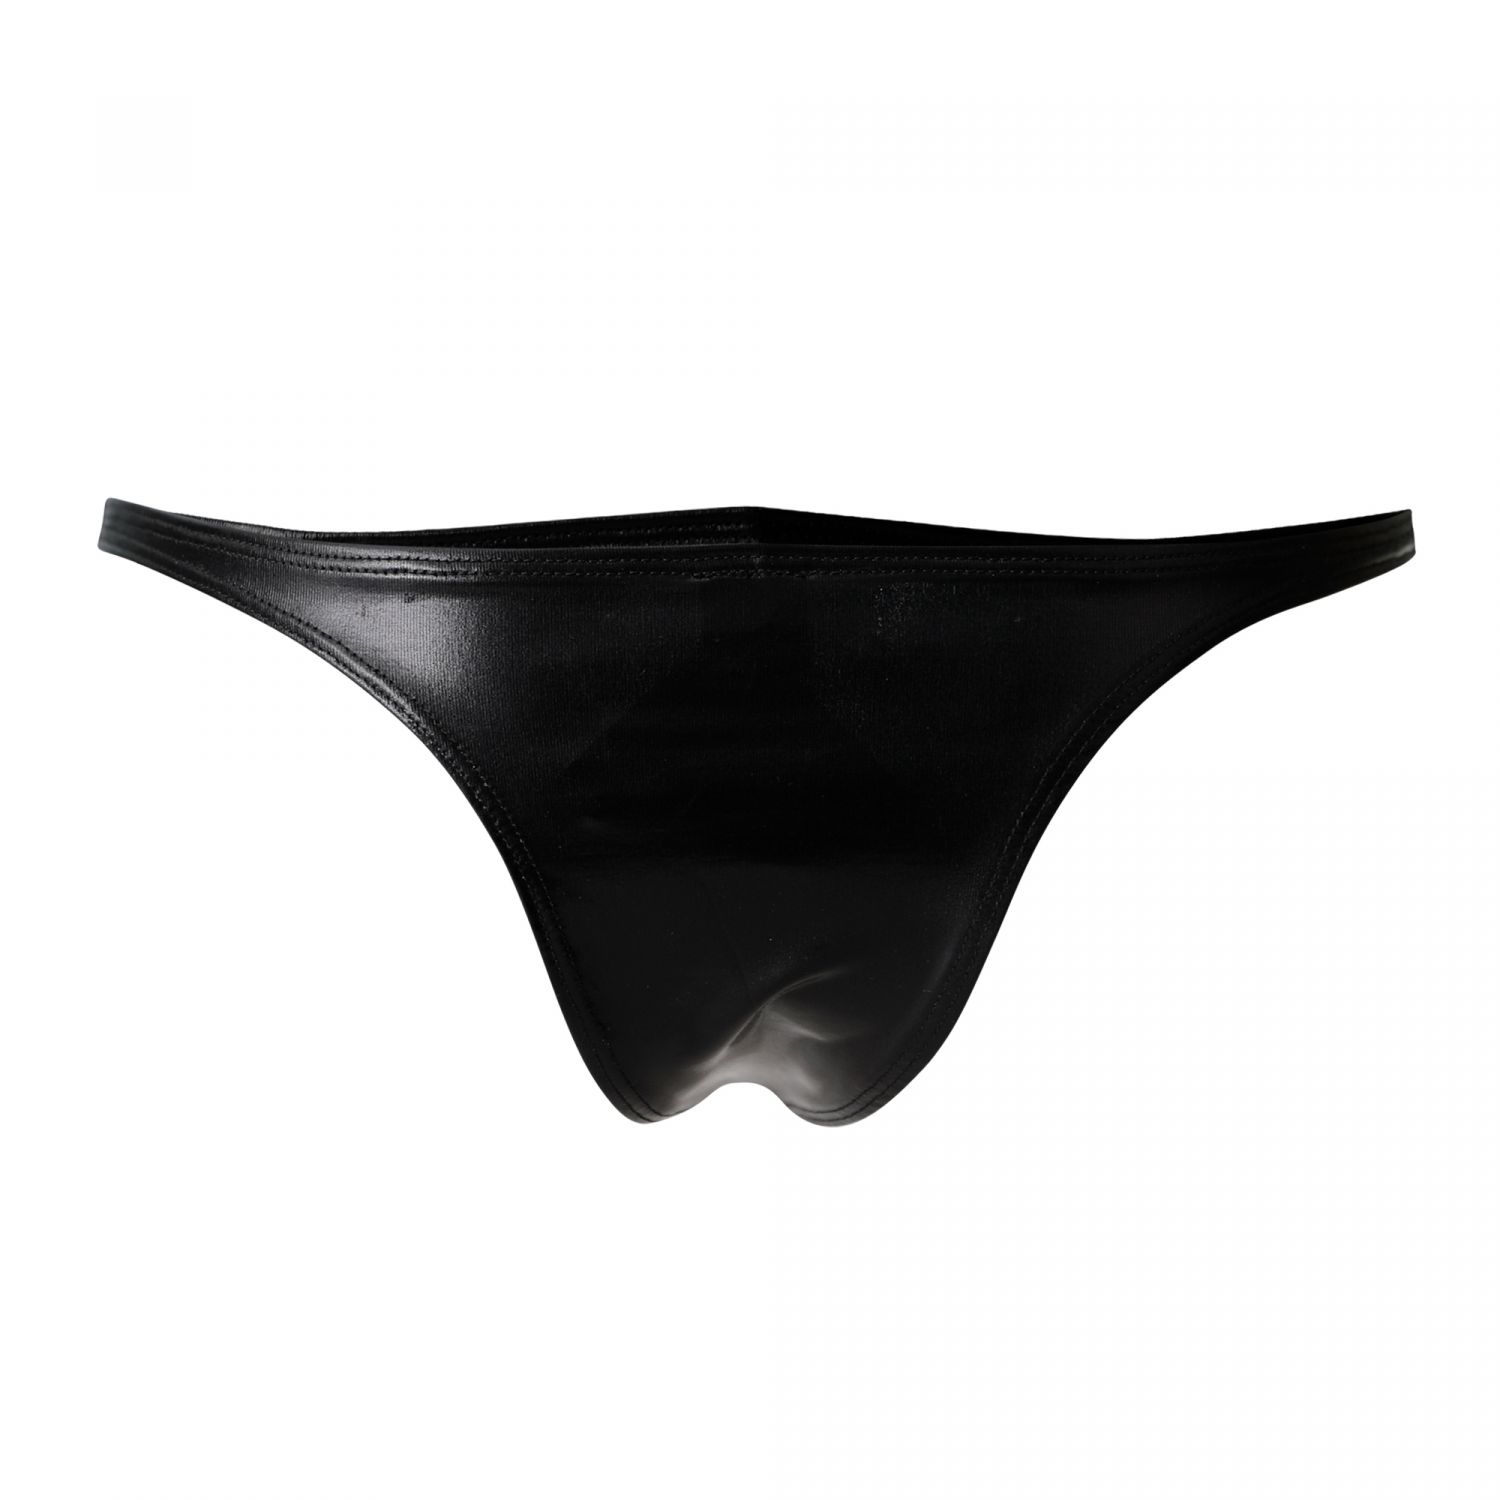 https://www.lumingerie.com/images/products/c4m11-brazilian-brief-black-leatherette-back-cutout_orig.jpg